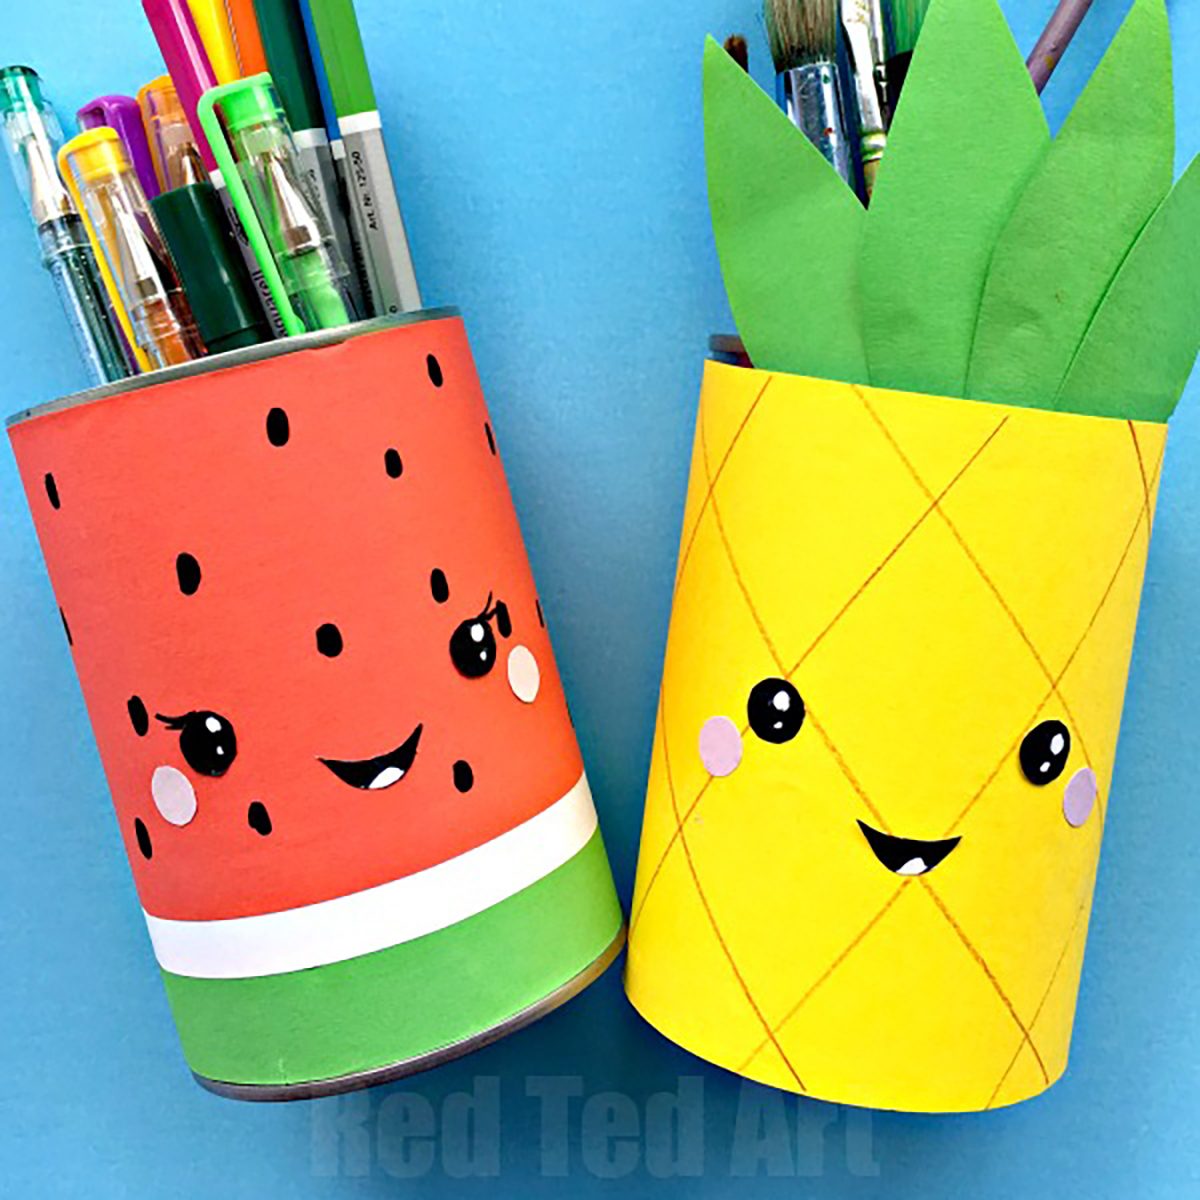 10 Fun Summer Crafts for Kids | Taste of Home